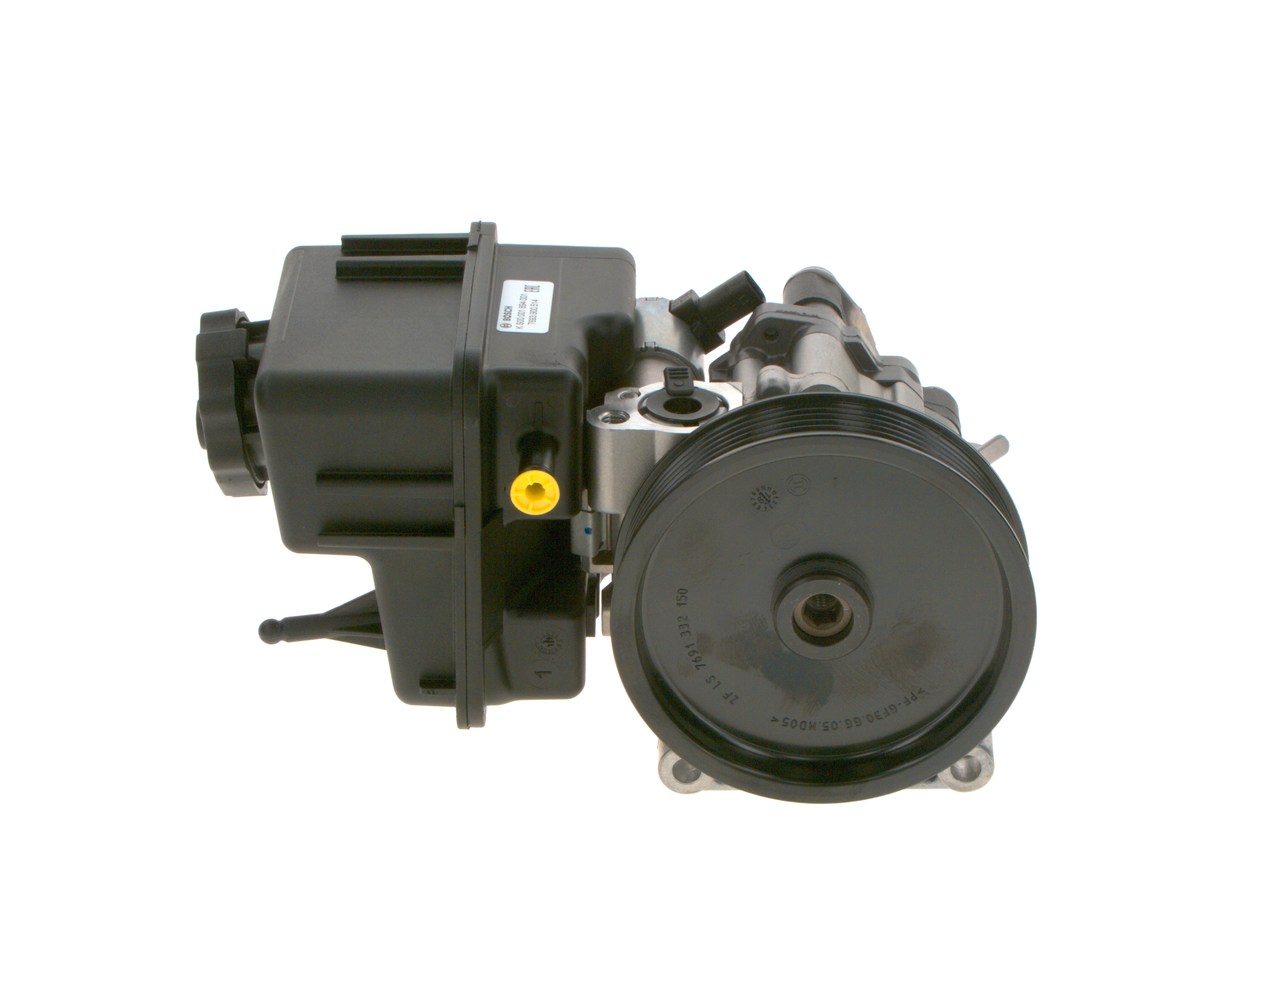 BOSCH K S00 001 894 Power steering pump Hydraulic, Pressure-limiting Valve, Vane Pump, Clockwise rotation